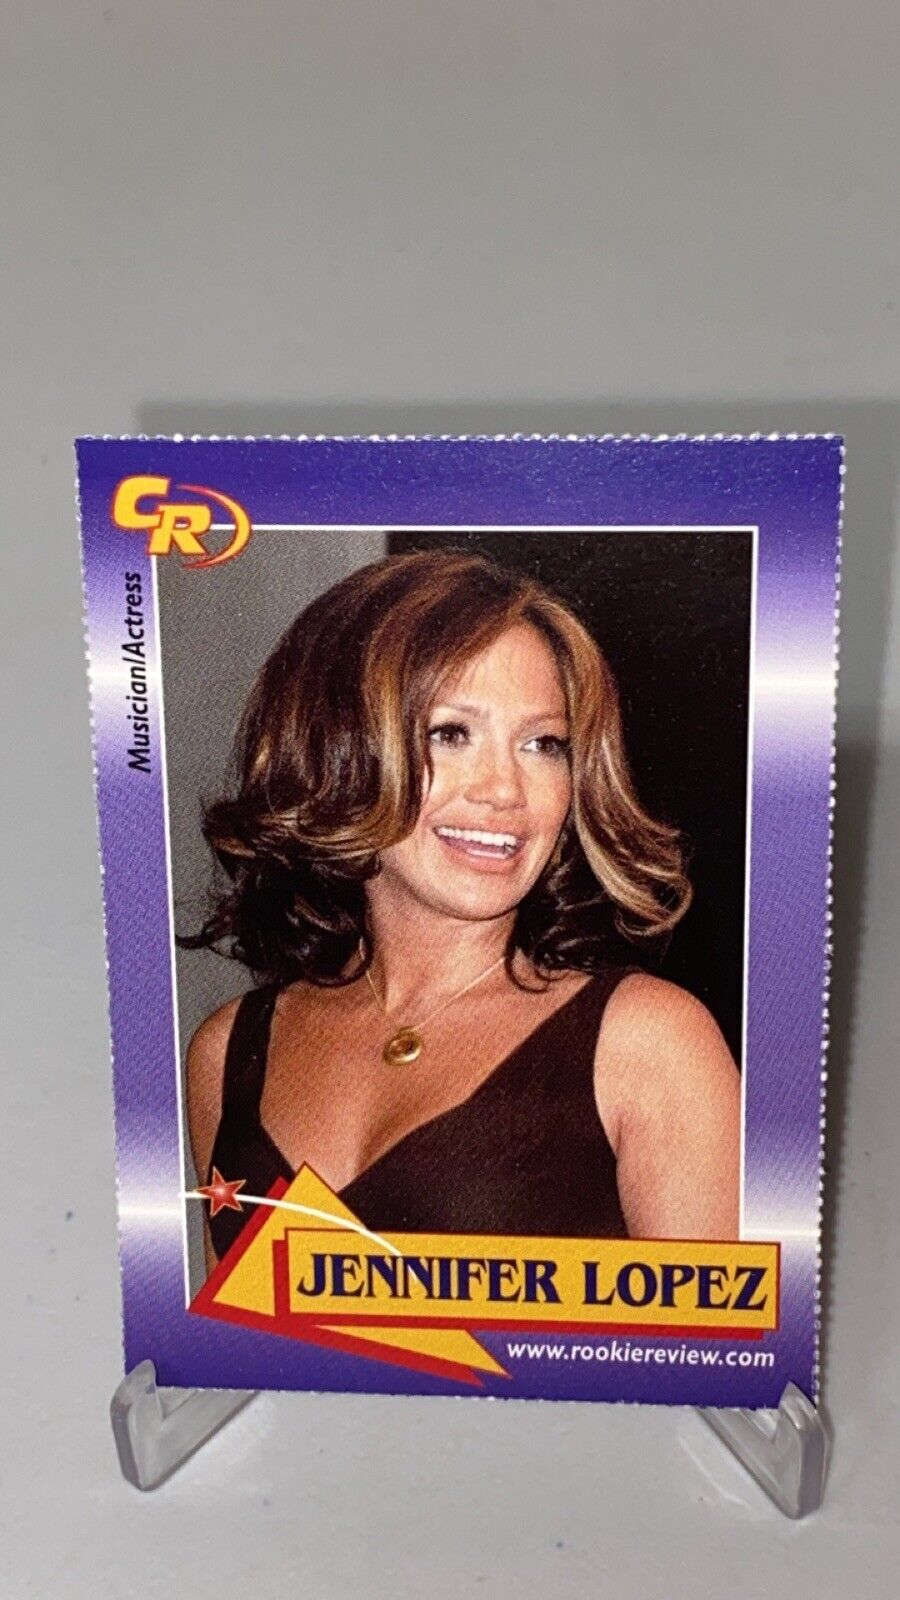 2003 Celebrity Review Rookie Review Jennifer Lopez Musician Actor Card #3 J-Lo